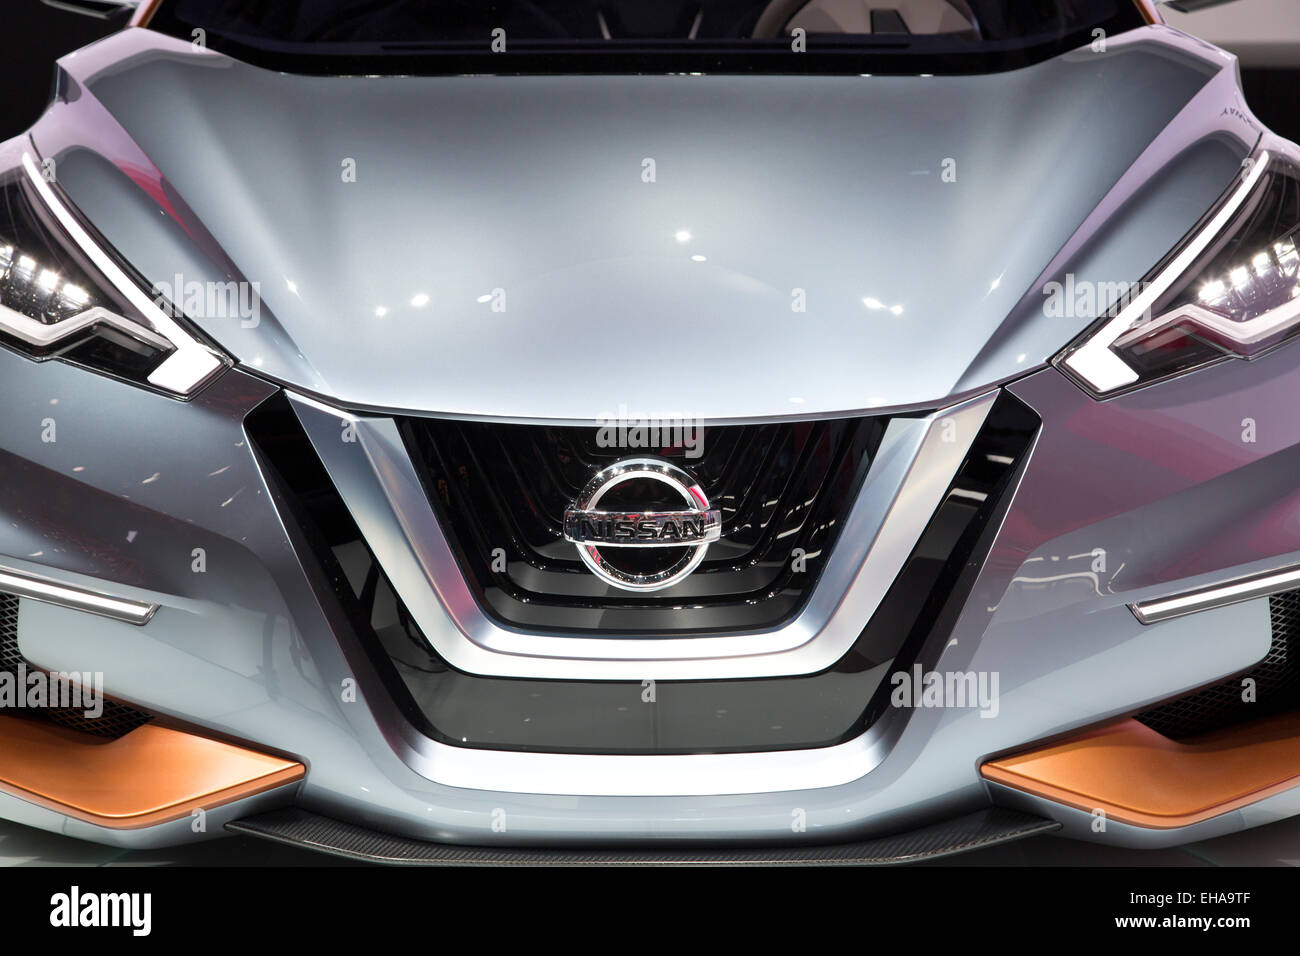 Nissan Sway concept at the Geneva motor show 2015 Stock Photo